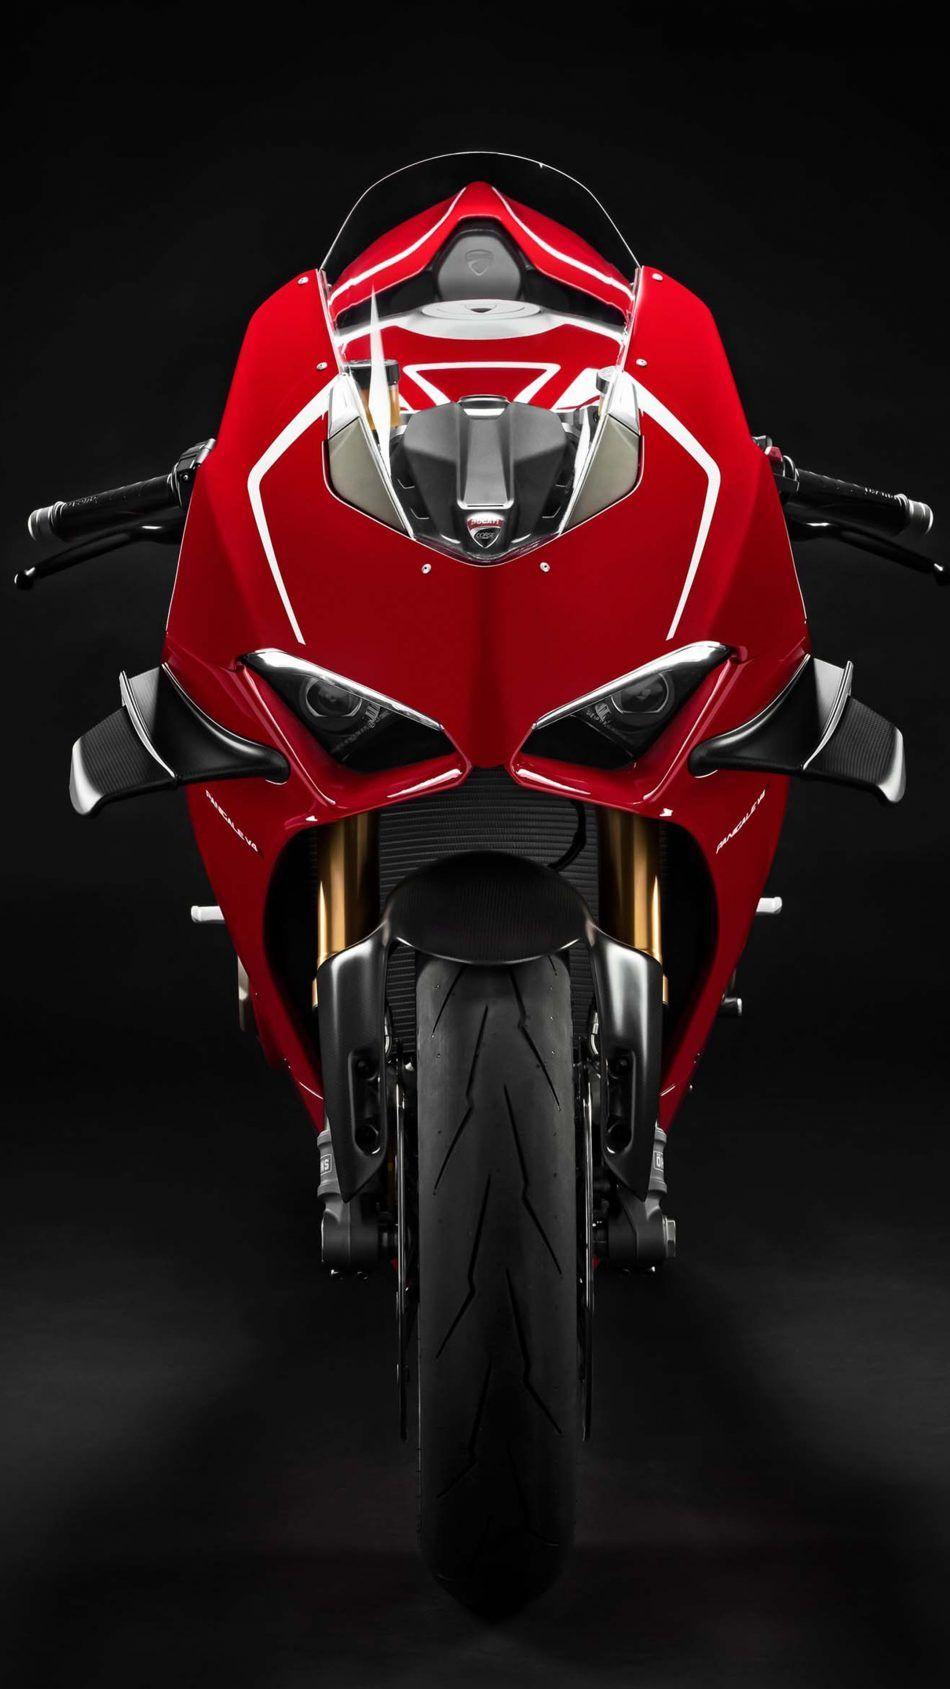 Ducati Panigale V4 R 4K Ultra HD Mobile Wallpaper. Ducati panigale, Ducati motor, Ducati